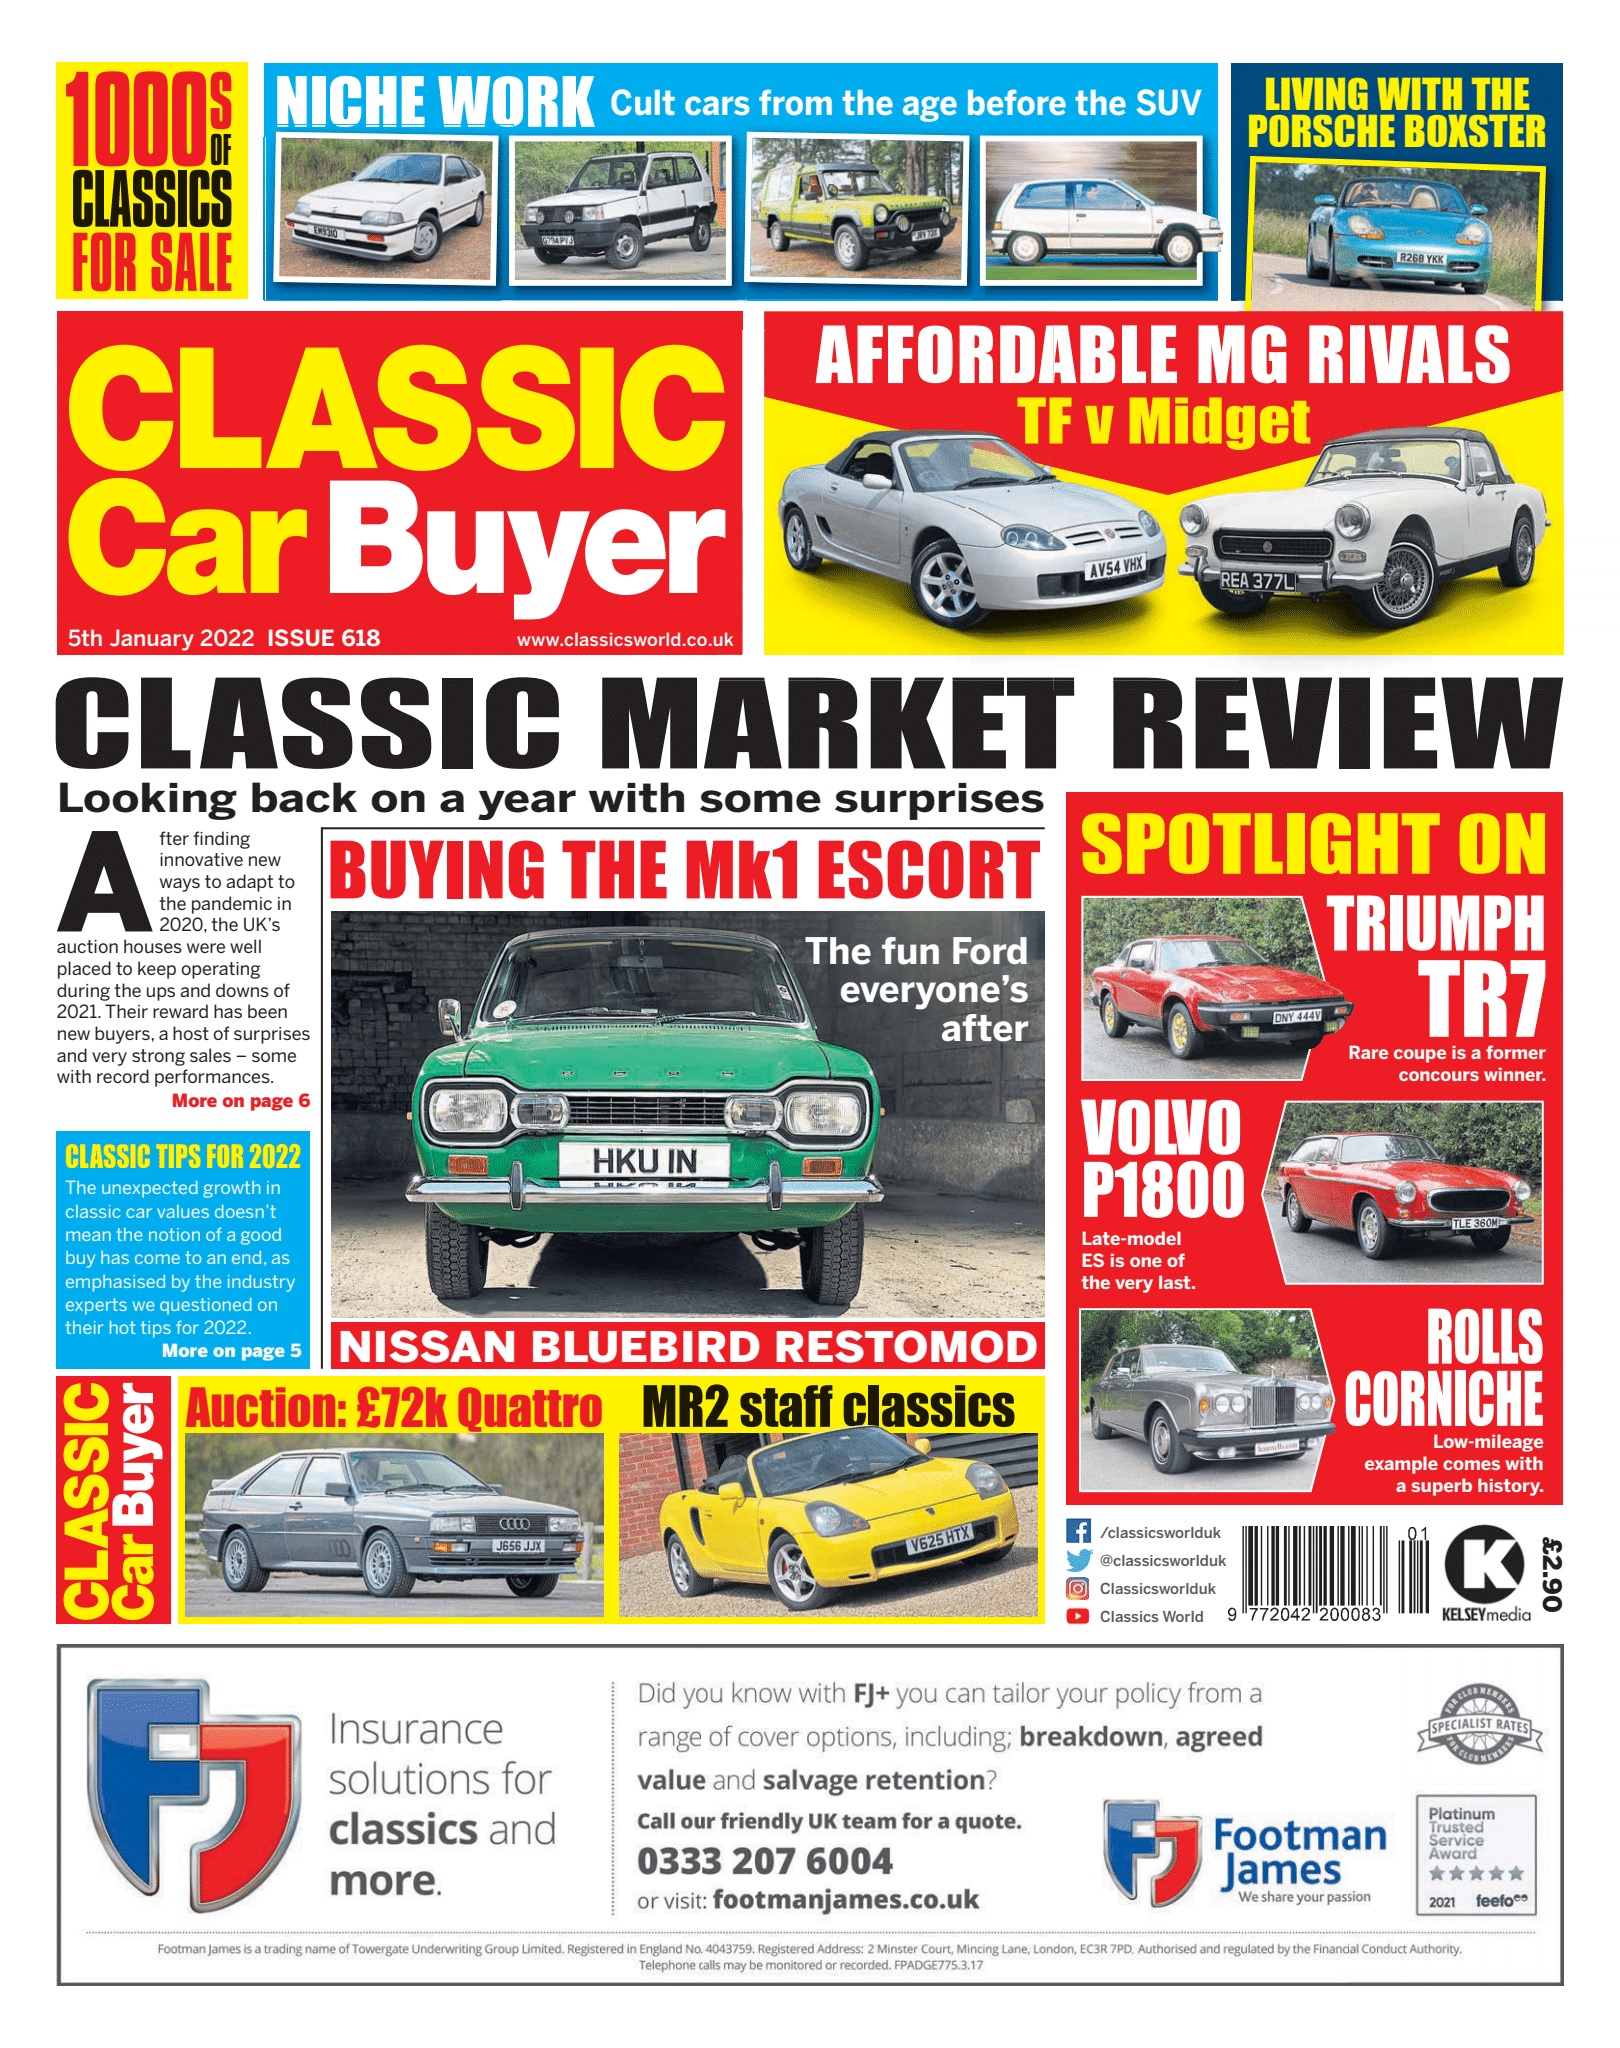 Classic Car Buyer #618 5th January 2022